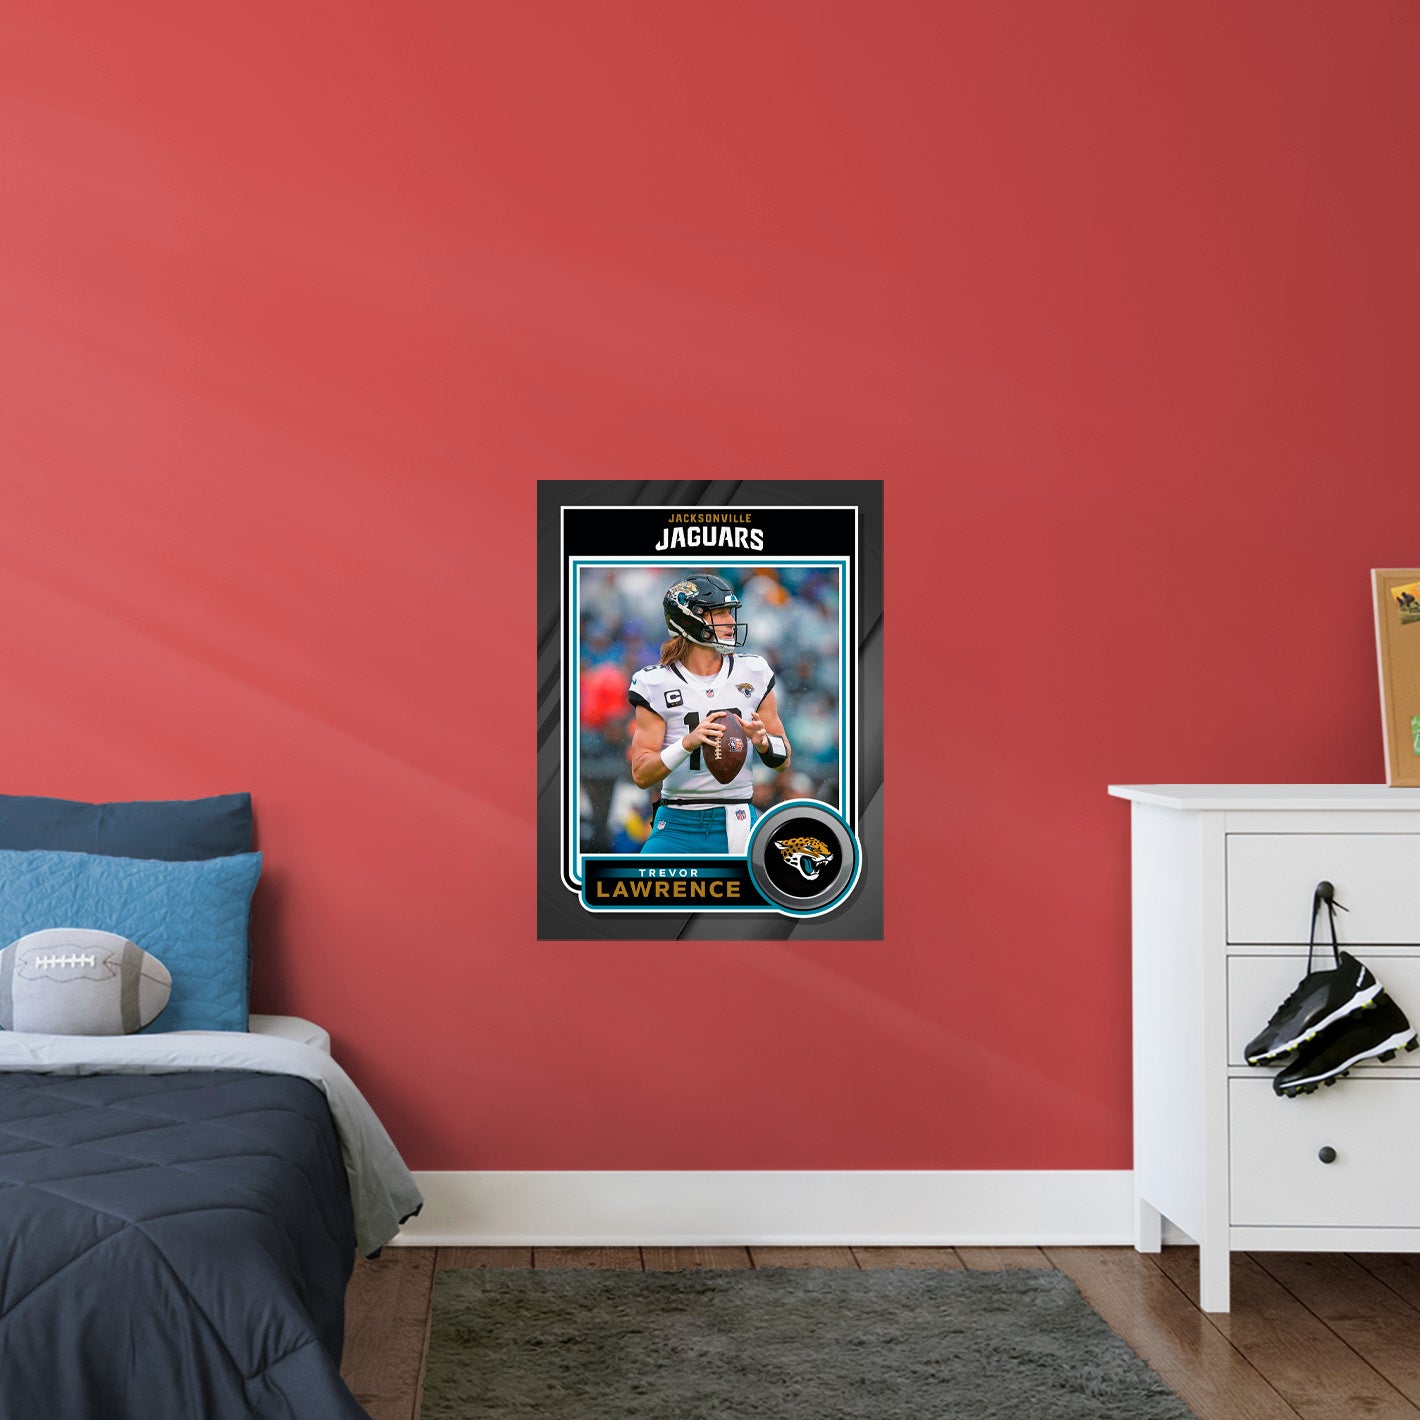 Jacksonville Jaguars: Trevor Lawrence Poster - Officially Licensed NFL Removable Adhesive Decal